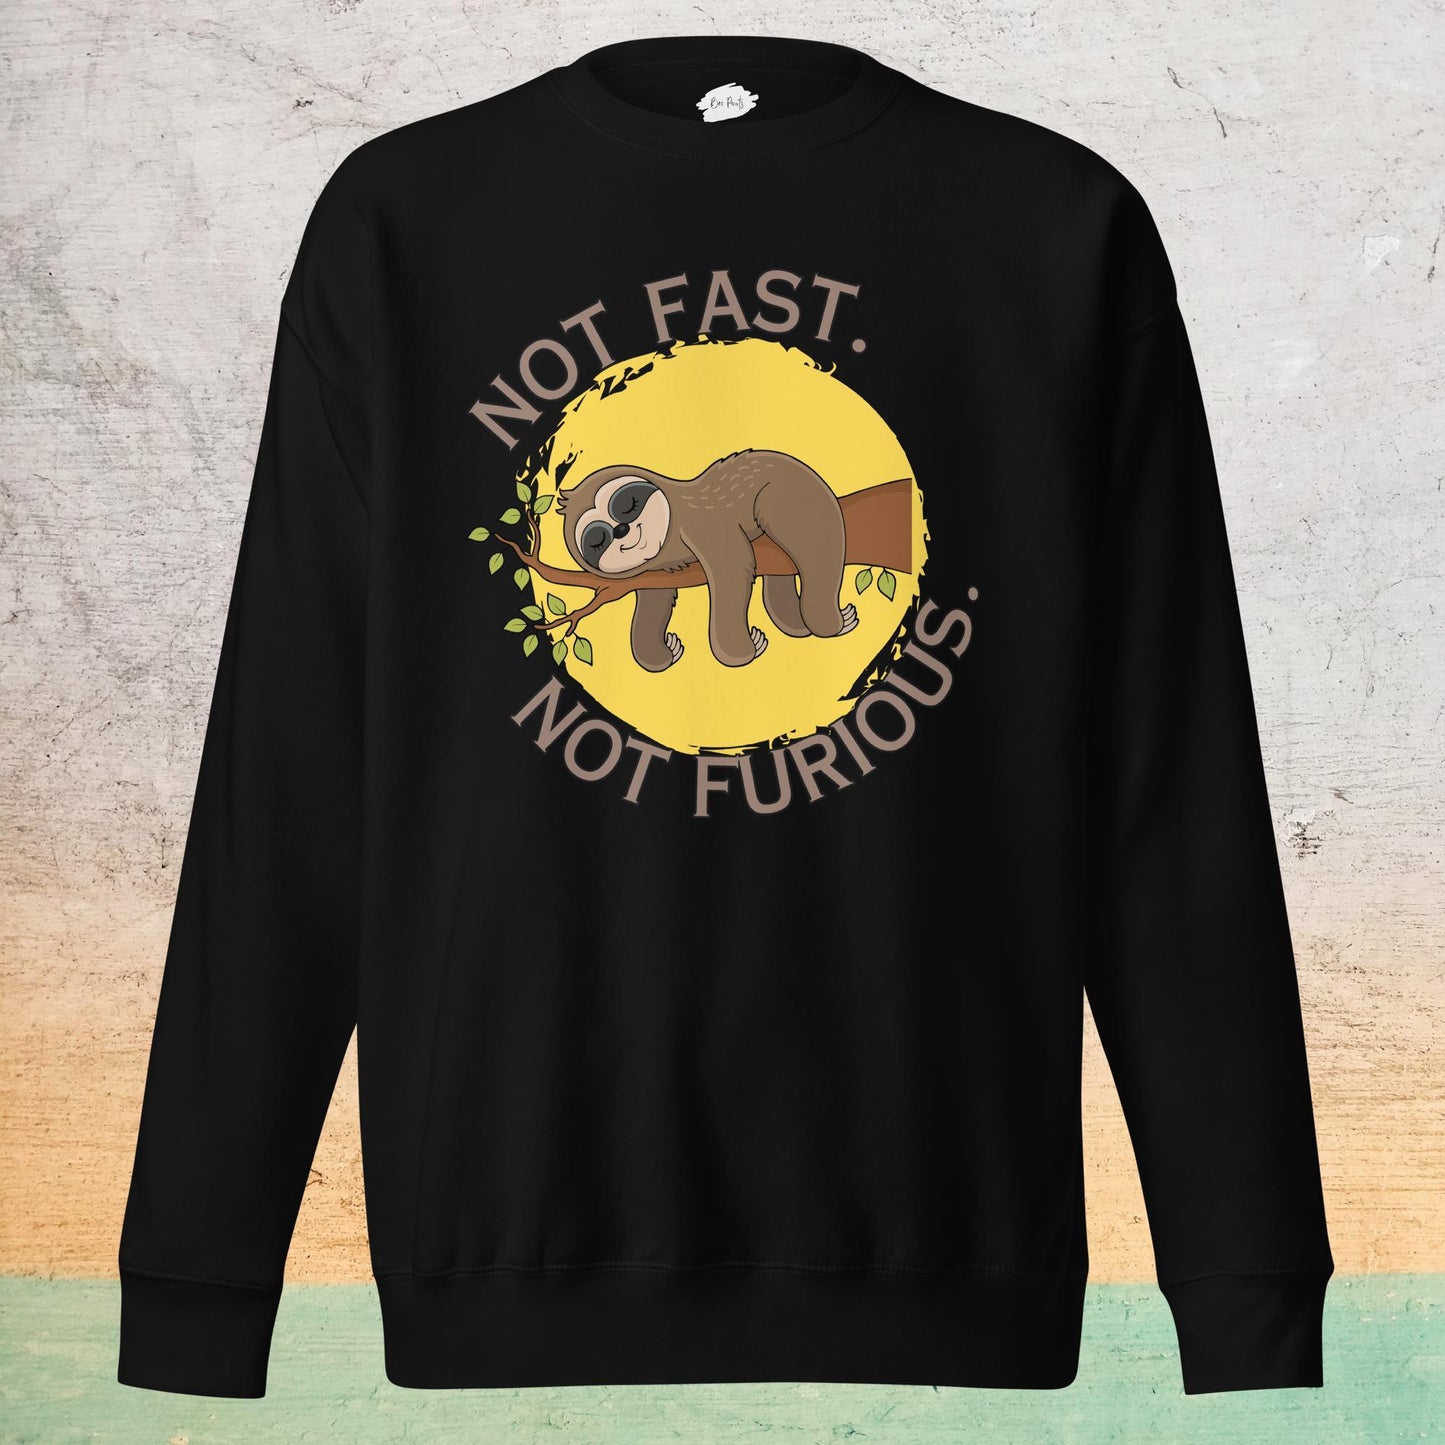 Premium Crew Neck Sweatshirt - Not Fast Not Furious